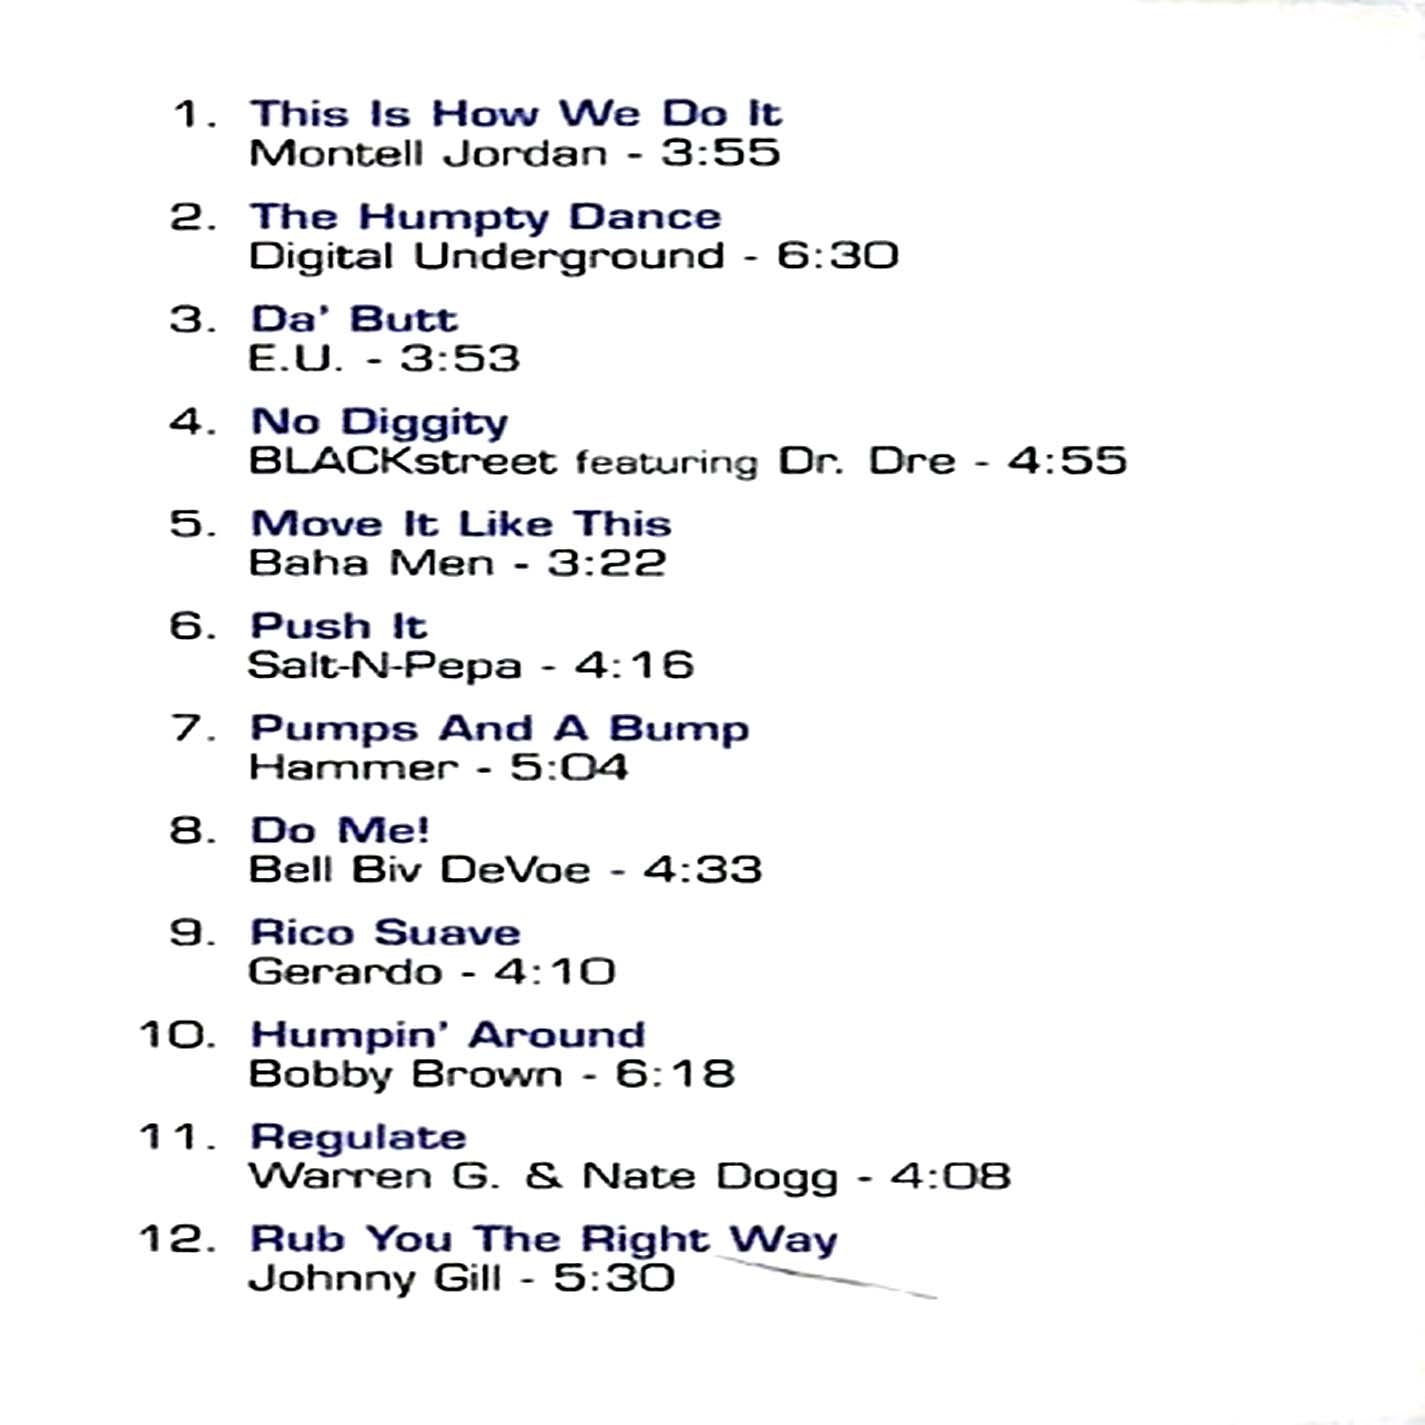 BOOTY SHAKIN' HITS - OL SKOOL RNB RAP (CD LP) c1987 -